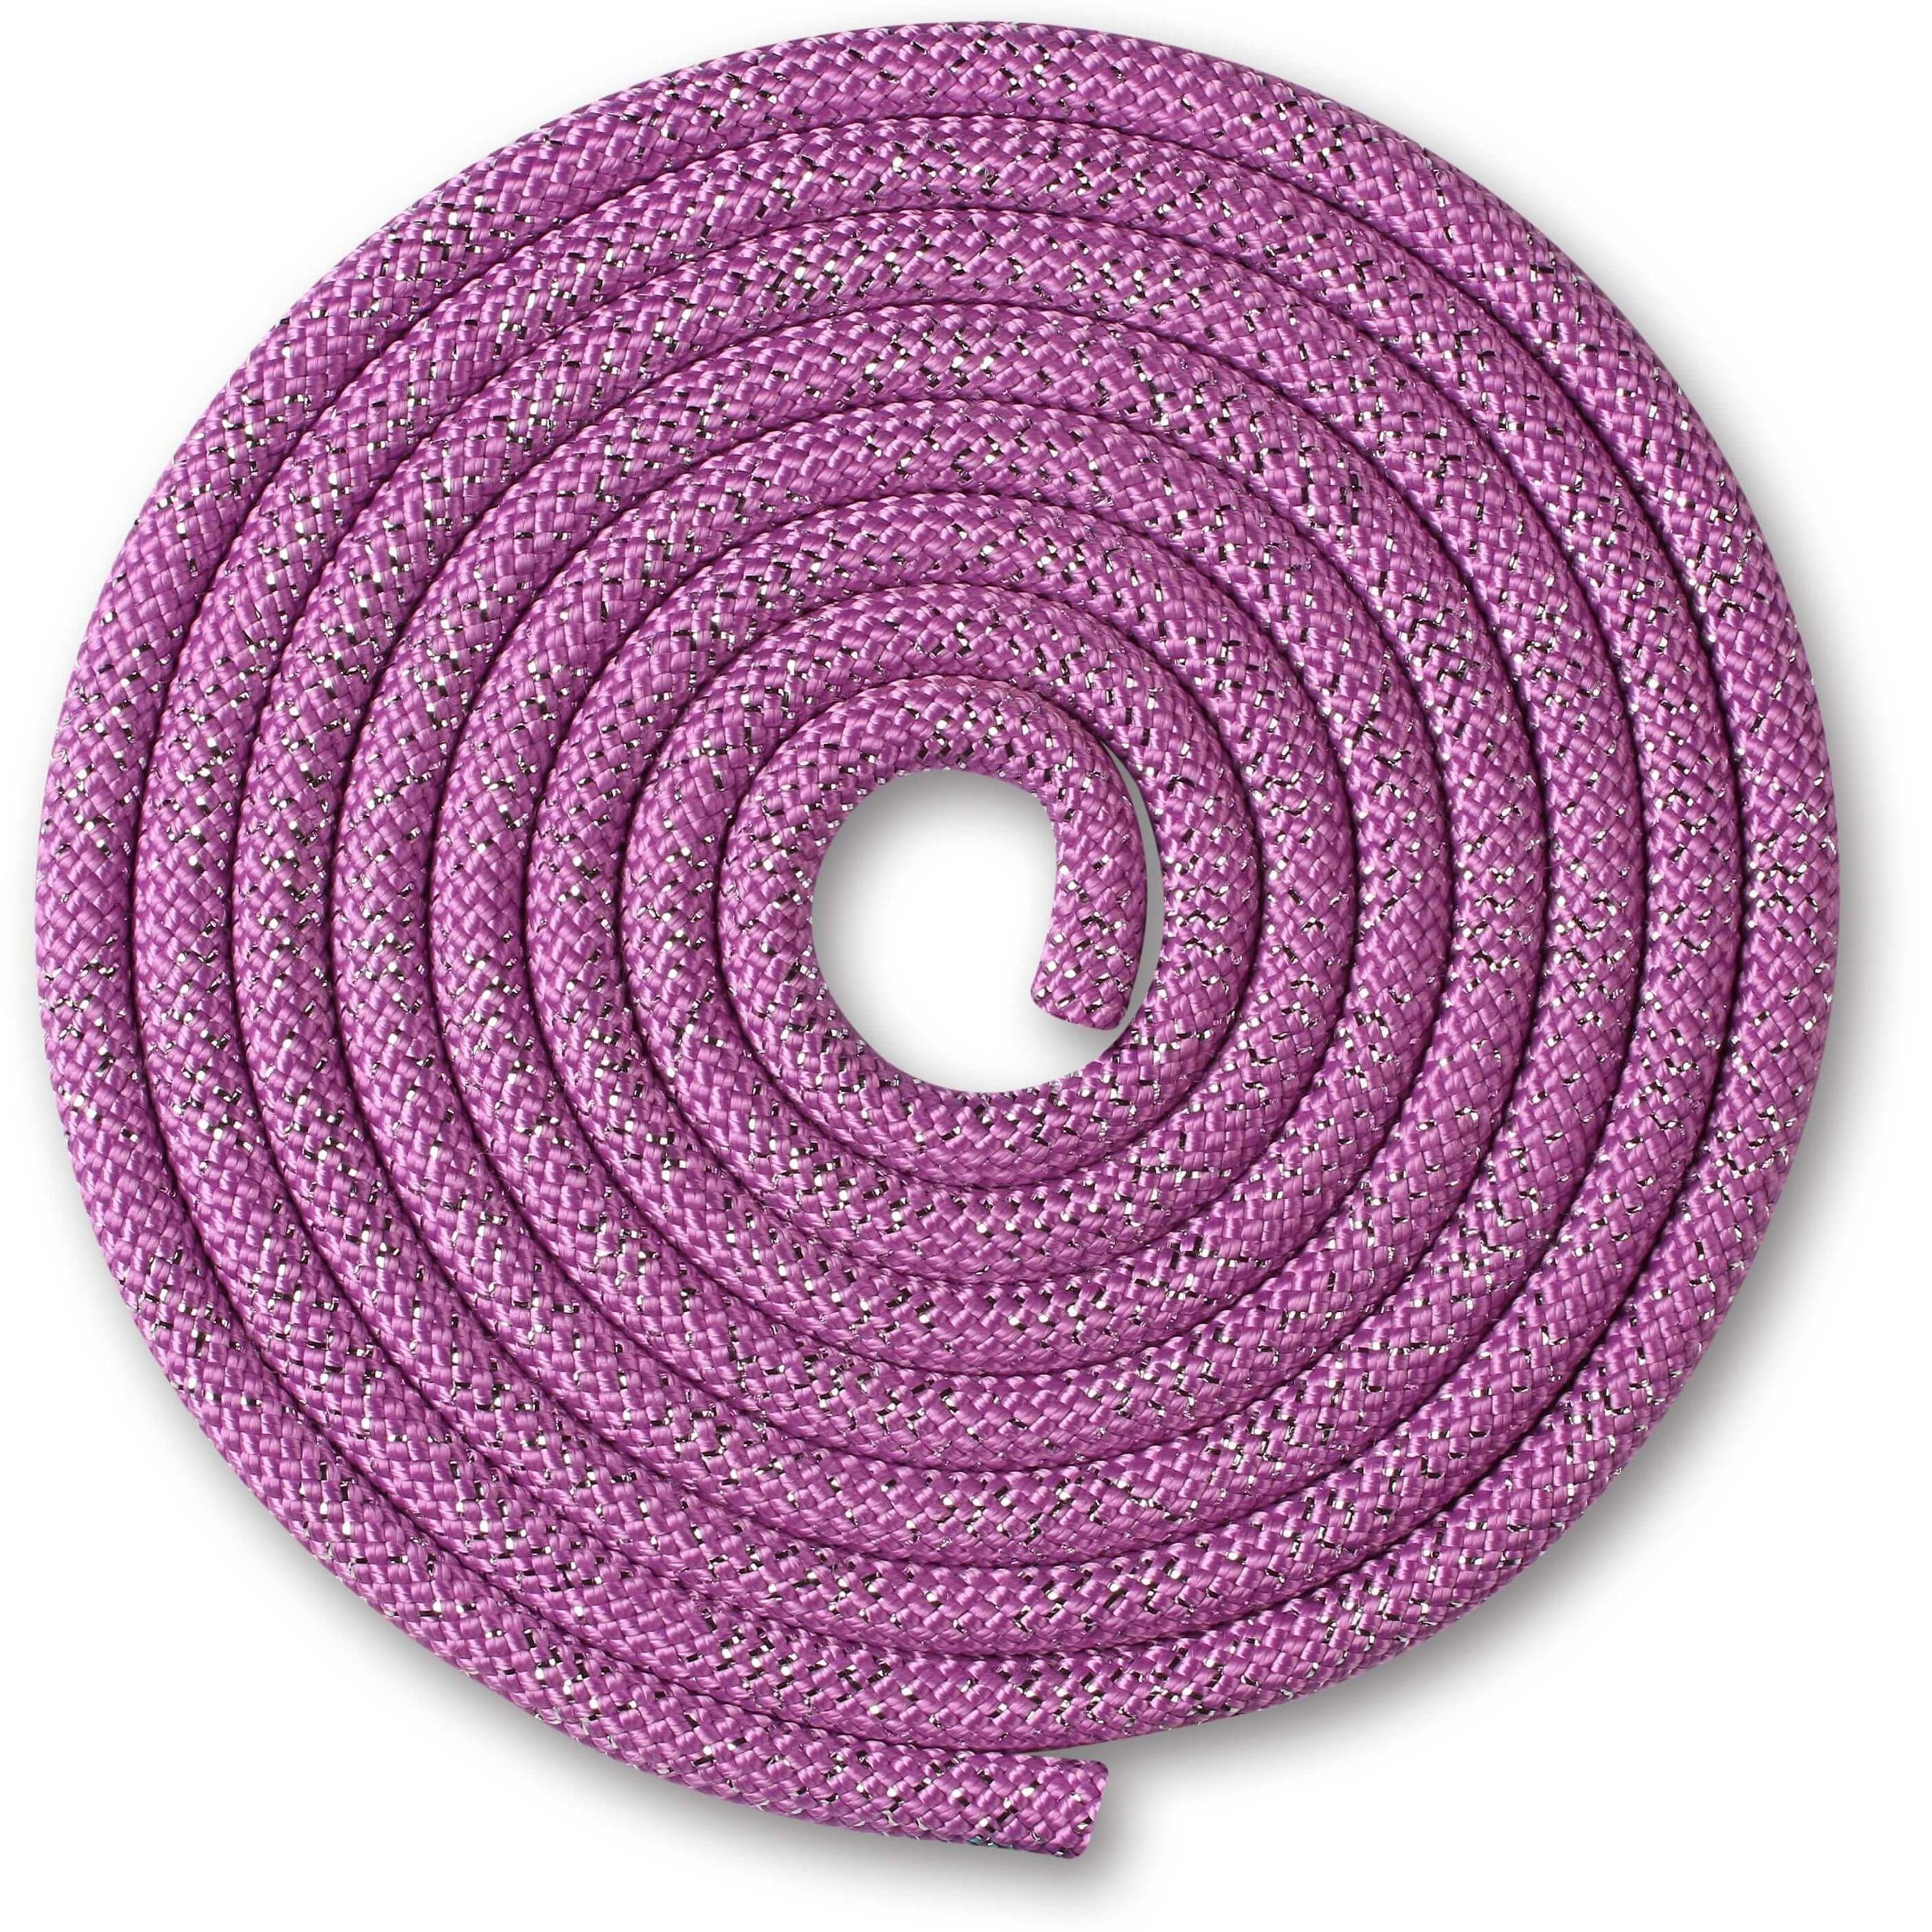 Cuerda para Gimnasia Rítmica Ponderada 150 g con Lurex INDIGO 2,5 m Púrpura